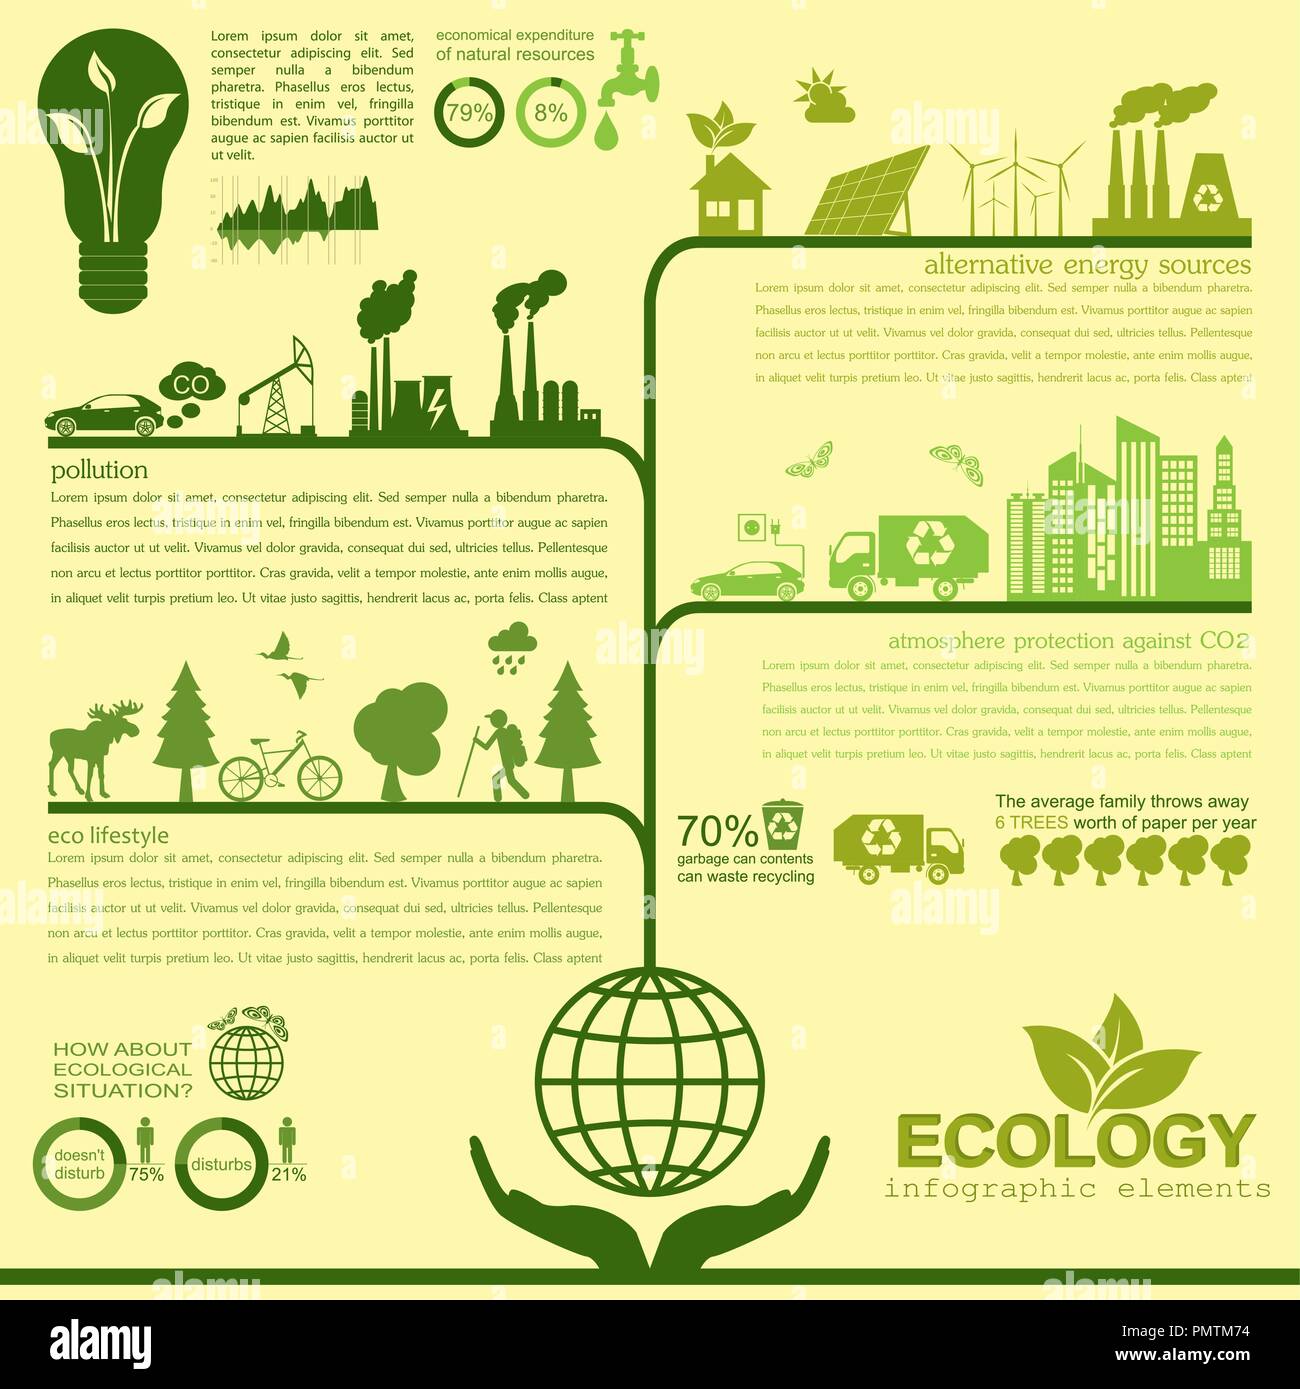 Environmental Health 101 | Visual.ly